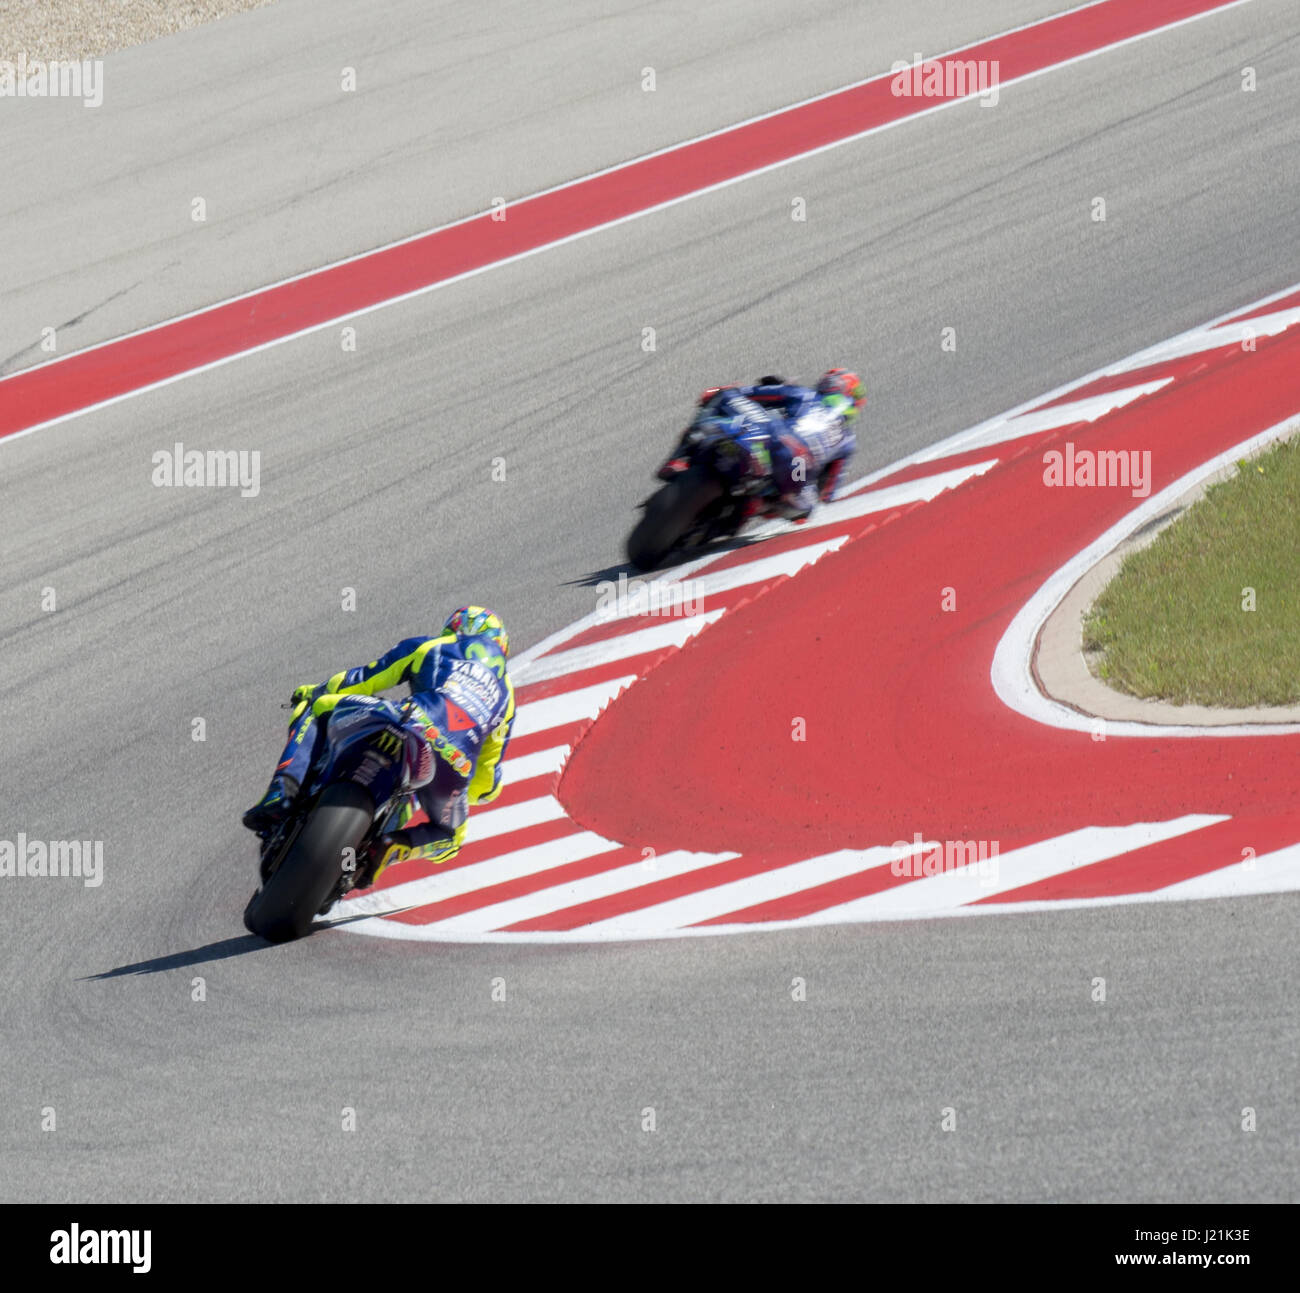 Austin, Texas, USA. 23rd Apr, 2017. Movistar Yamaha MOTO GP rider # 46 ''VALENTINO ROSSI'' going into turn 2. Credit: Hoss Mcbain/ZUMA Wire/Alamy Live News Stock Photo